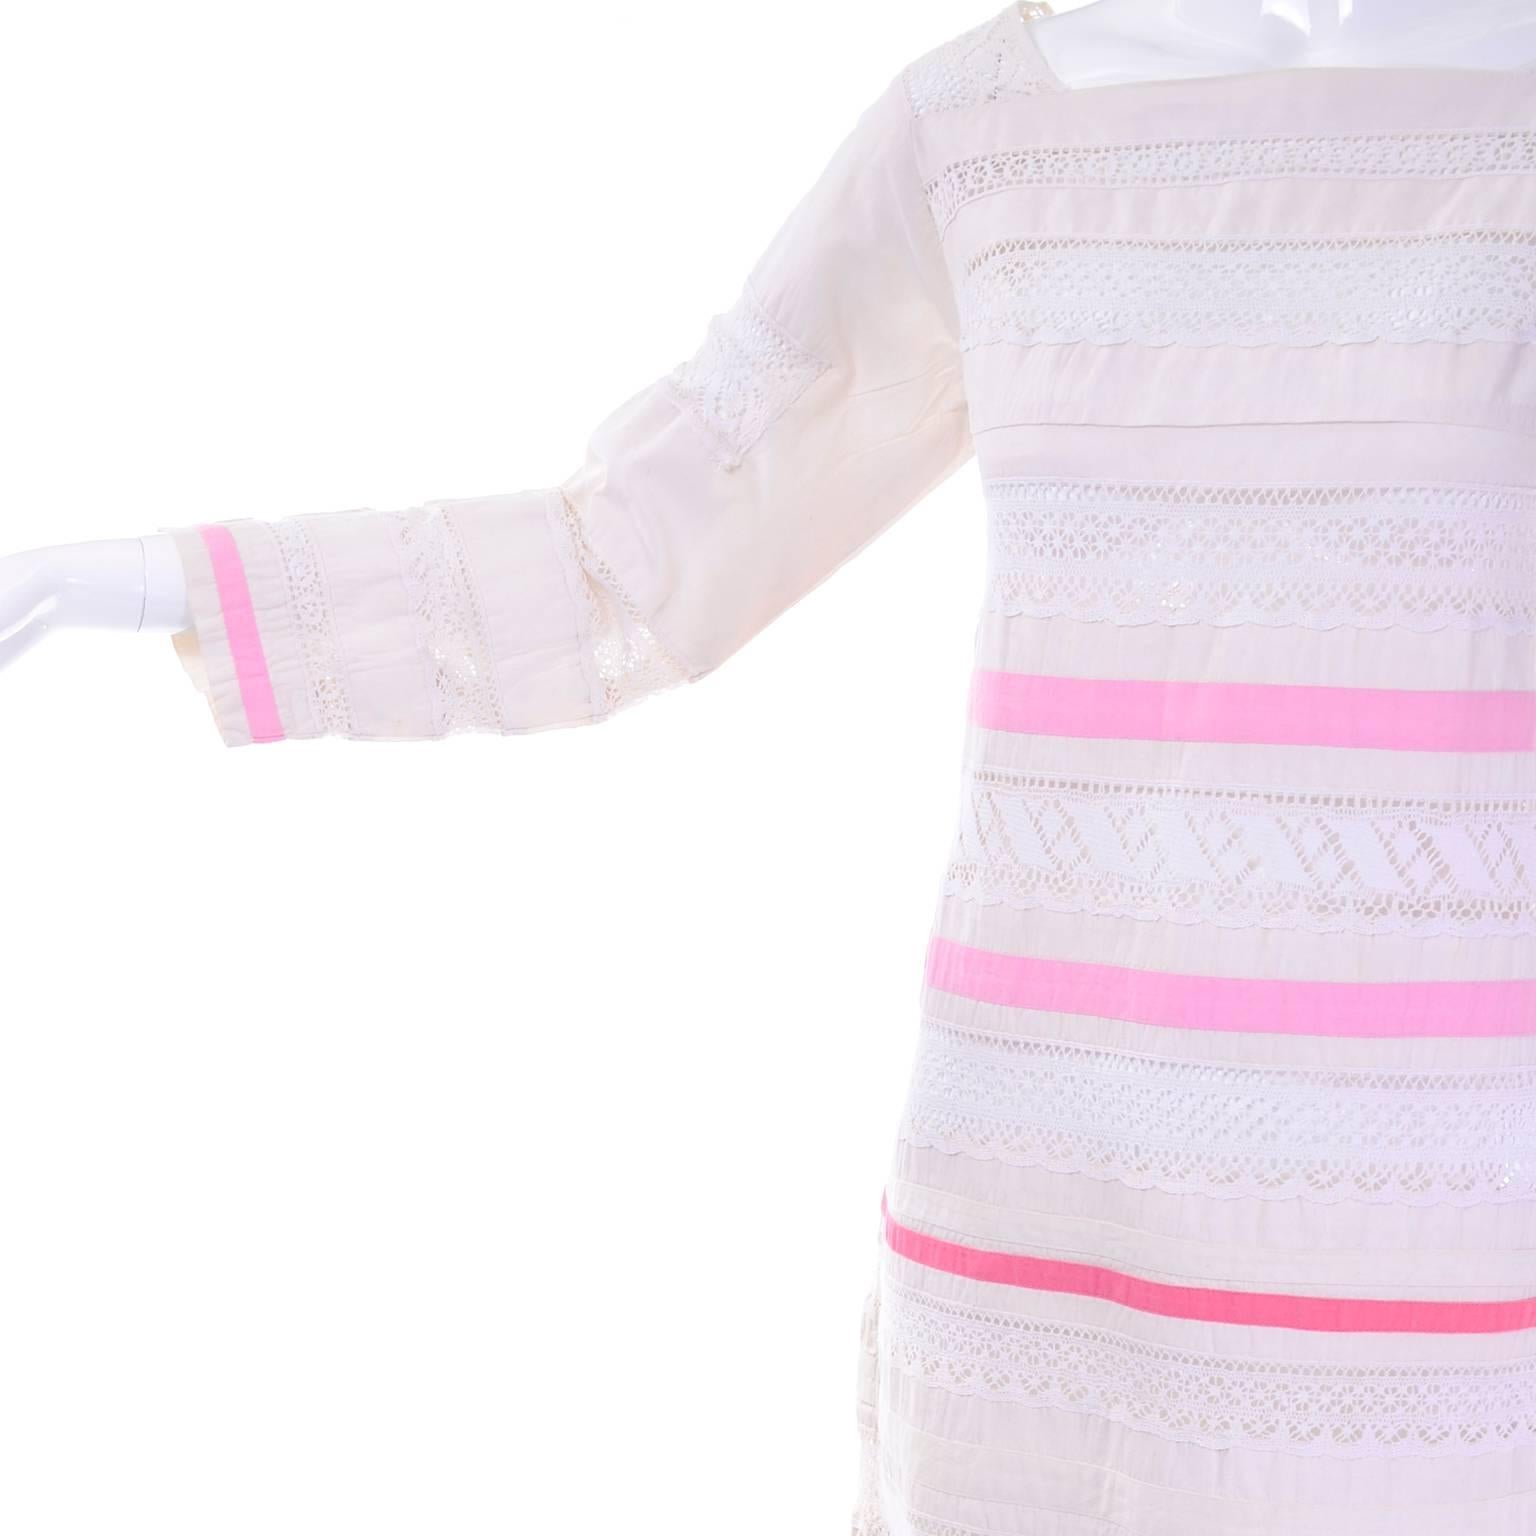 Beige 1960s Guatemalan Cotton & Lace Vintage Shift Dress in Pink Cream & White 